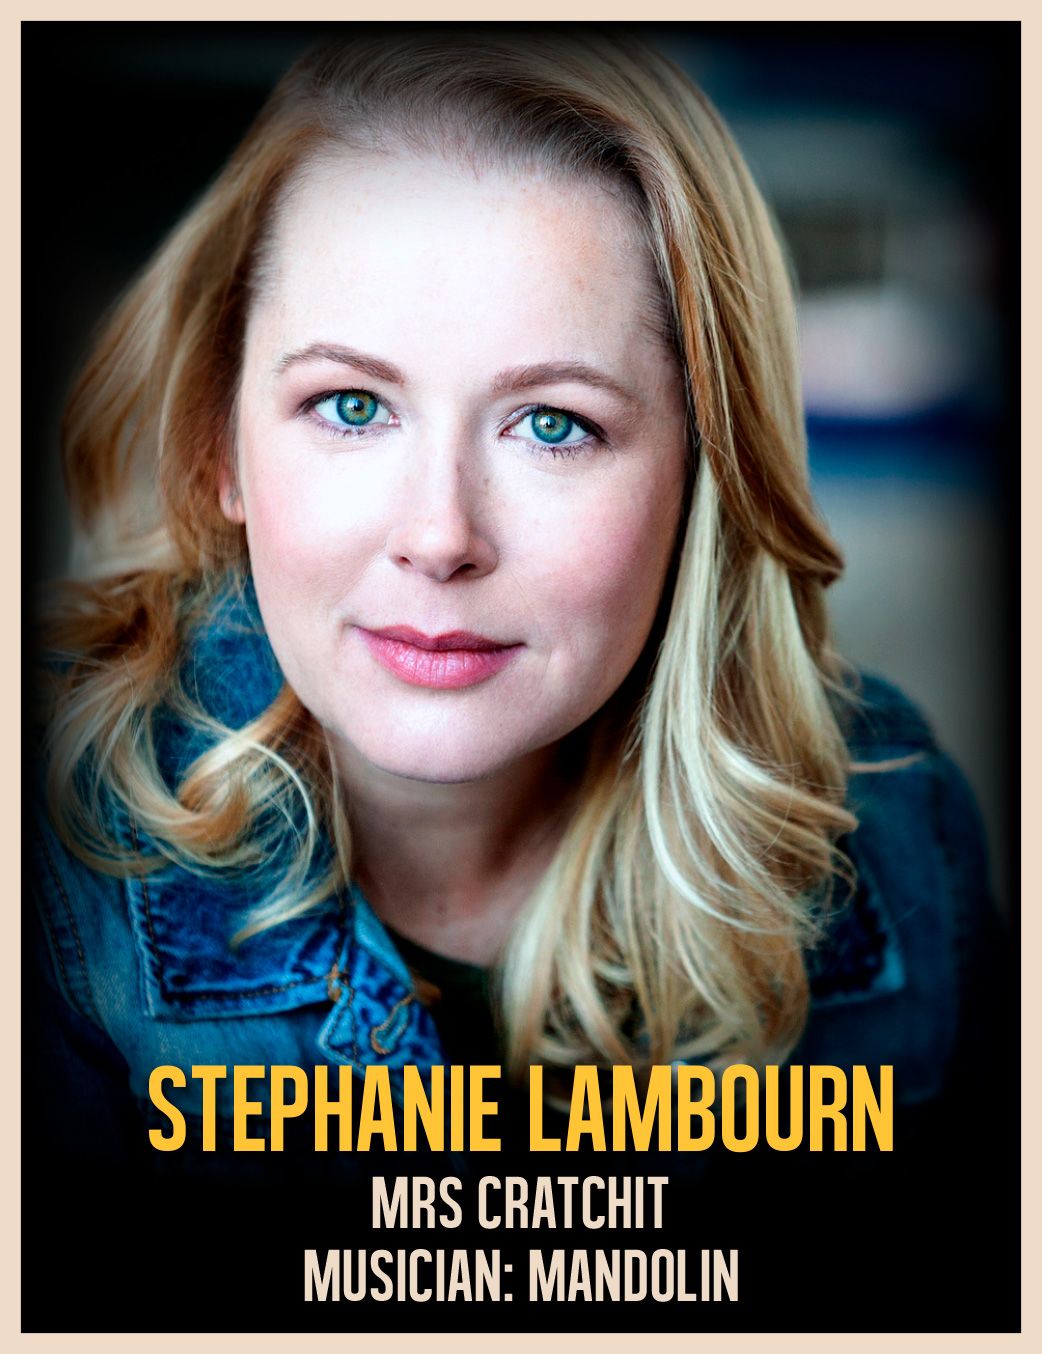 Stephanie Lambourn